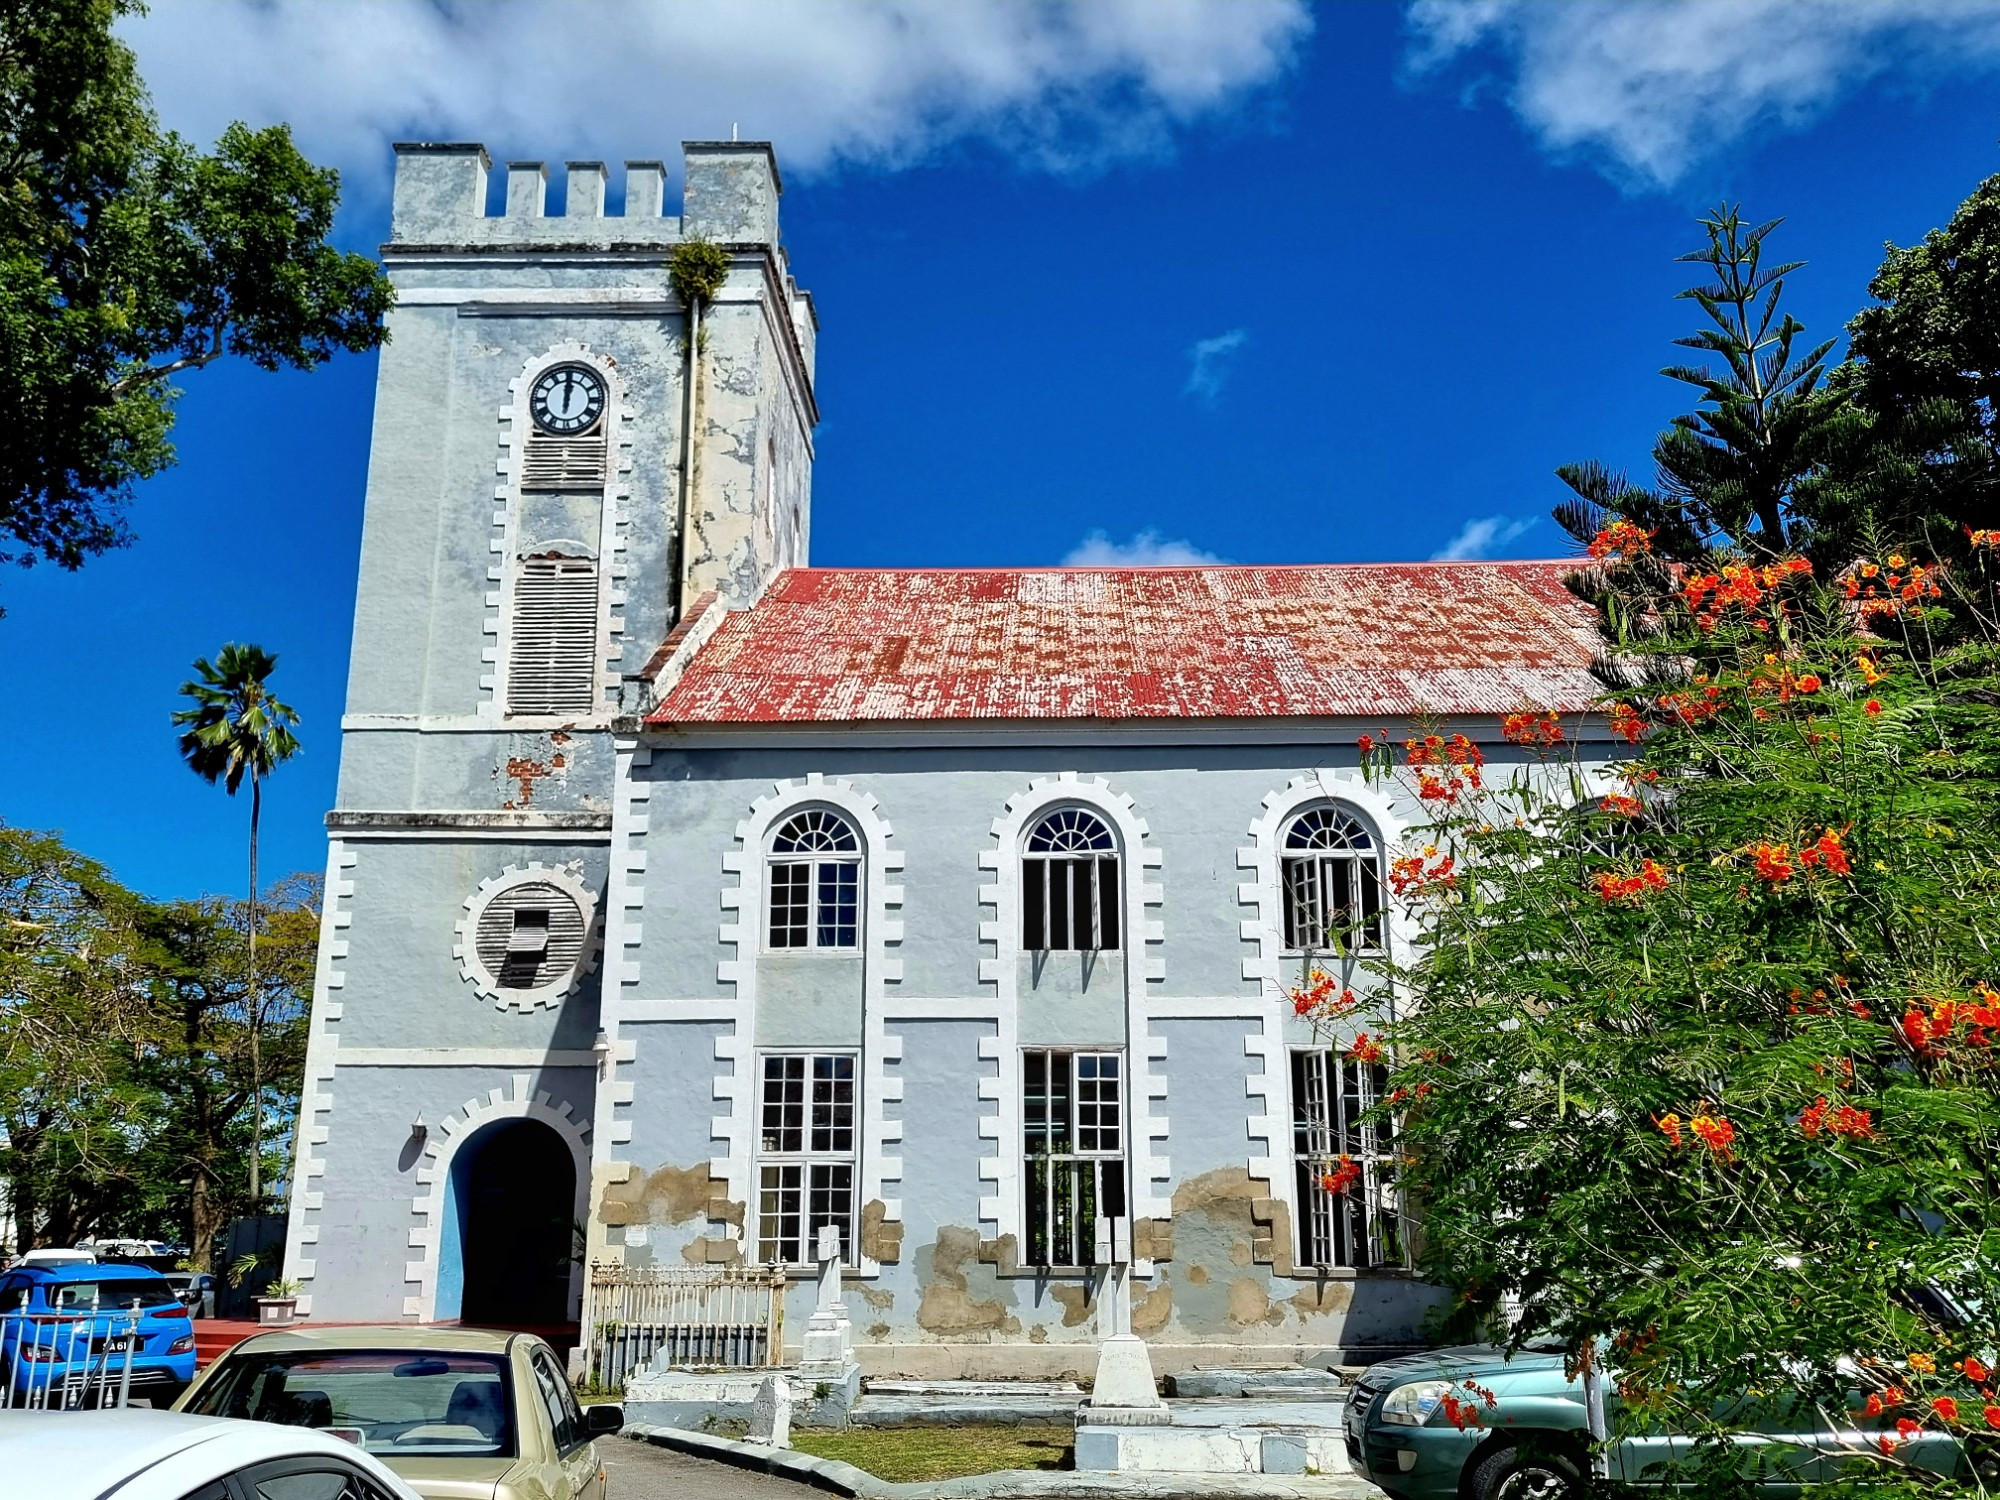 St Mary's Church, Barbados